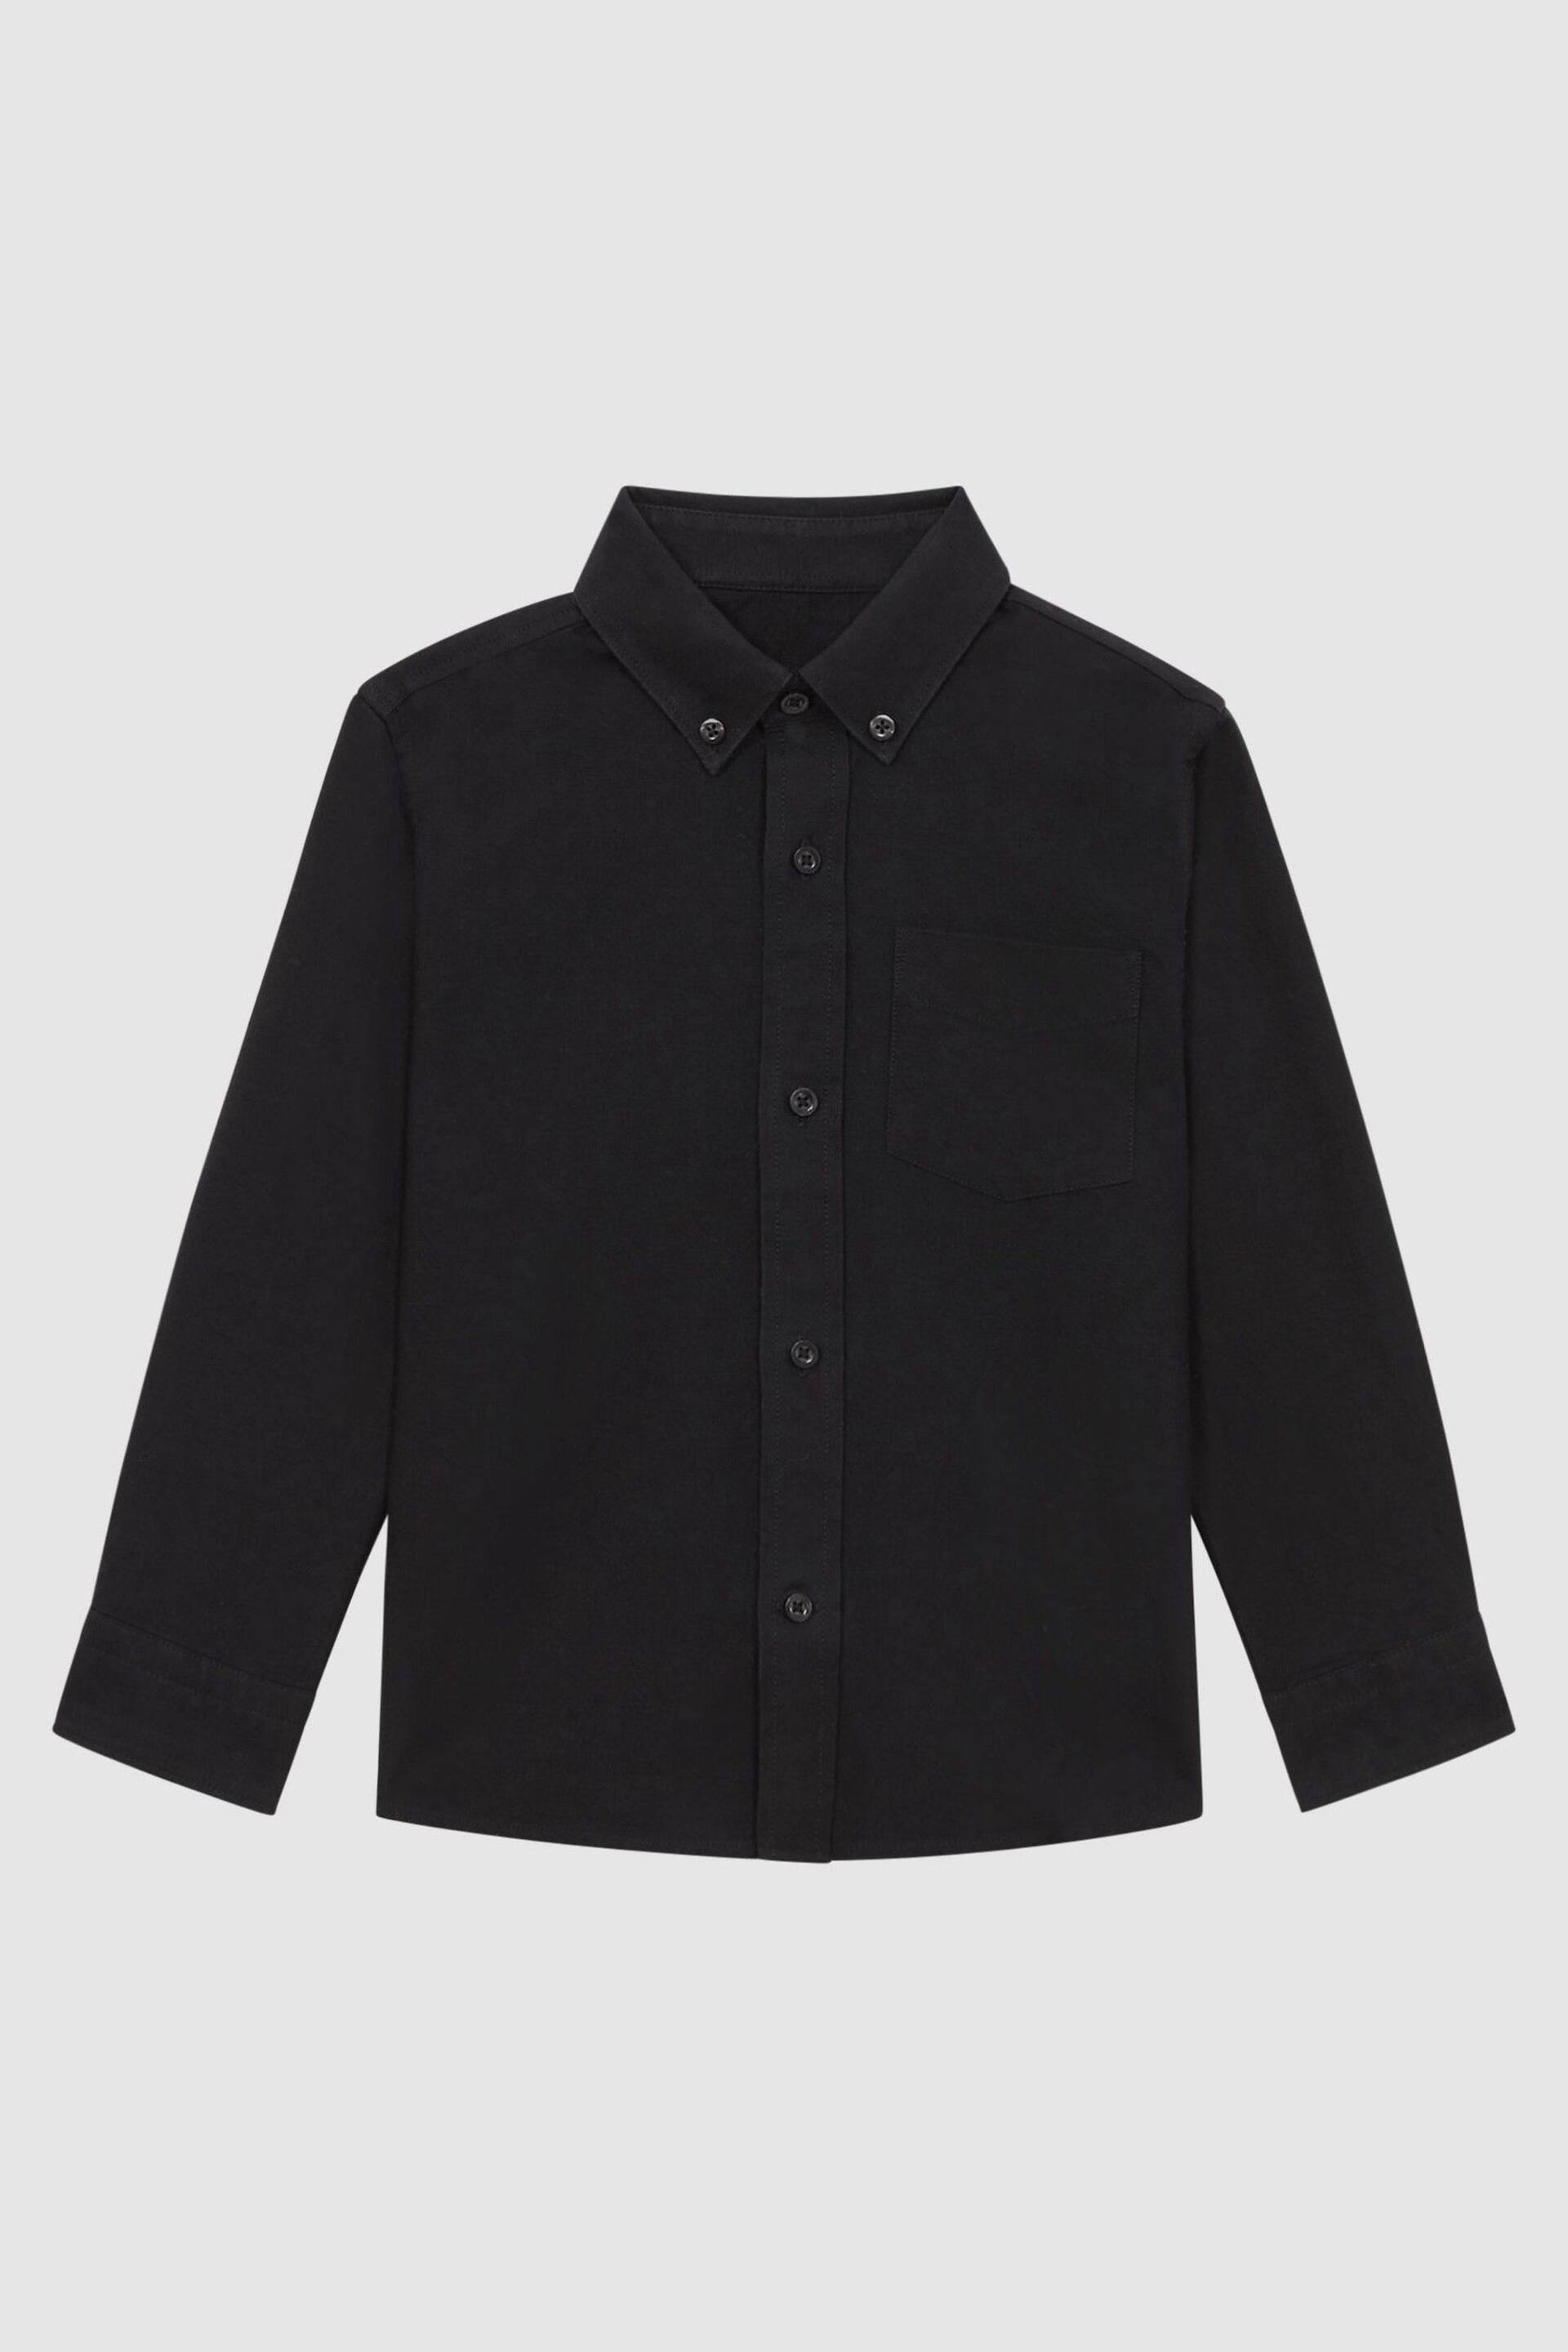 Reiss Black Greenwich Senior Slim Fit Button-Down Oxford Shirt - Image 2 of 6